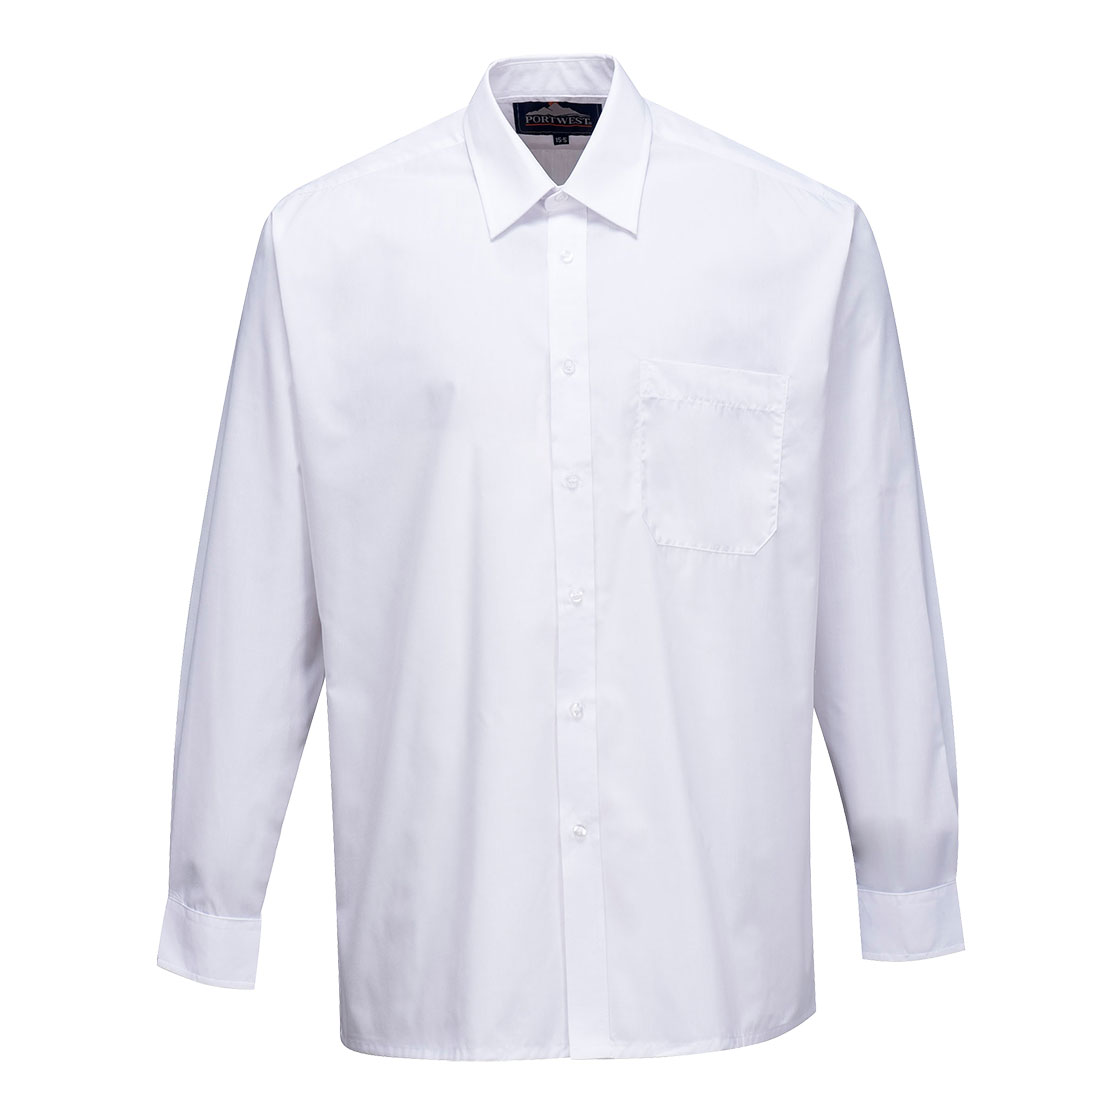 Portwest Classic Shirt Long Sleeves